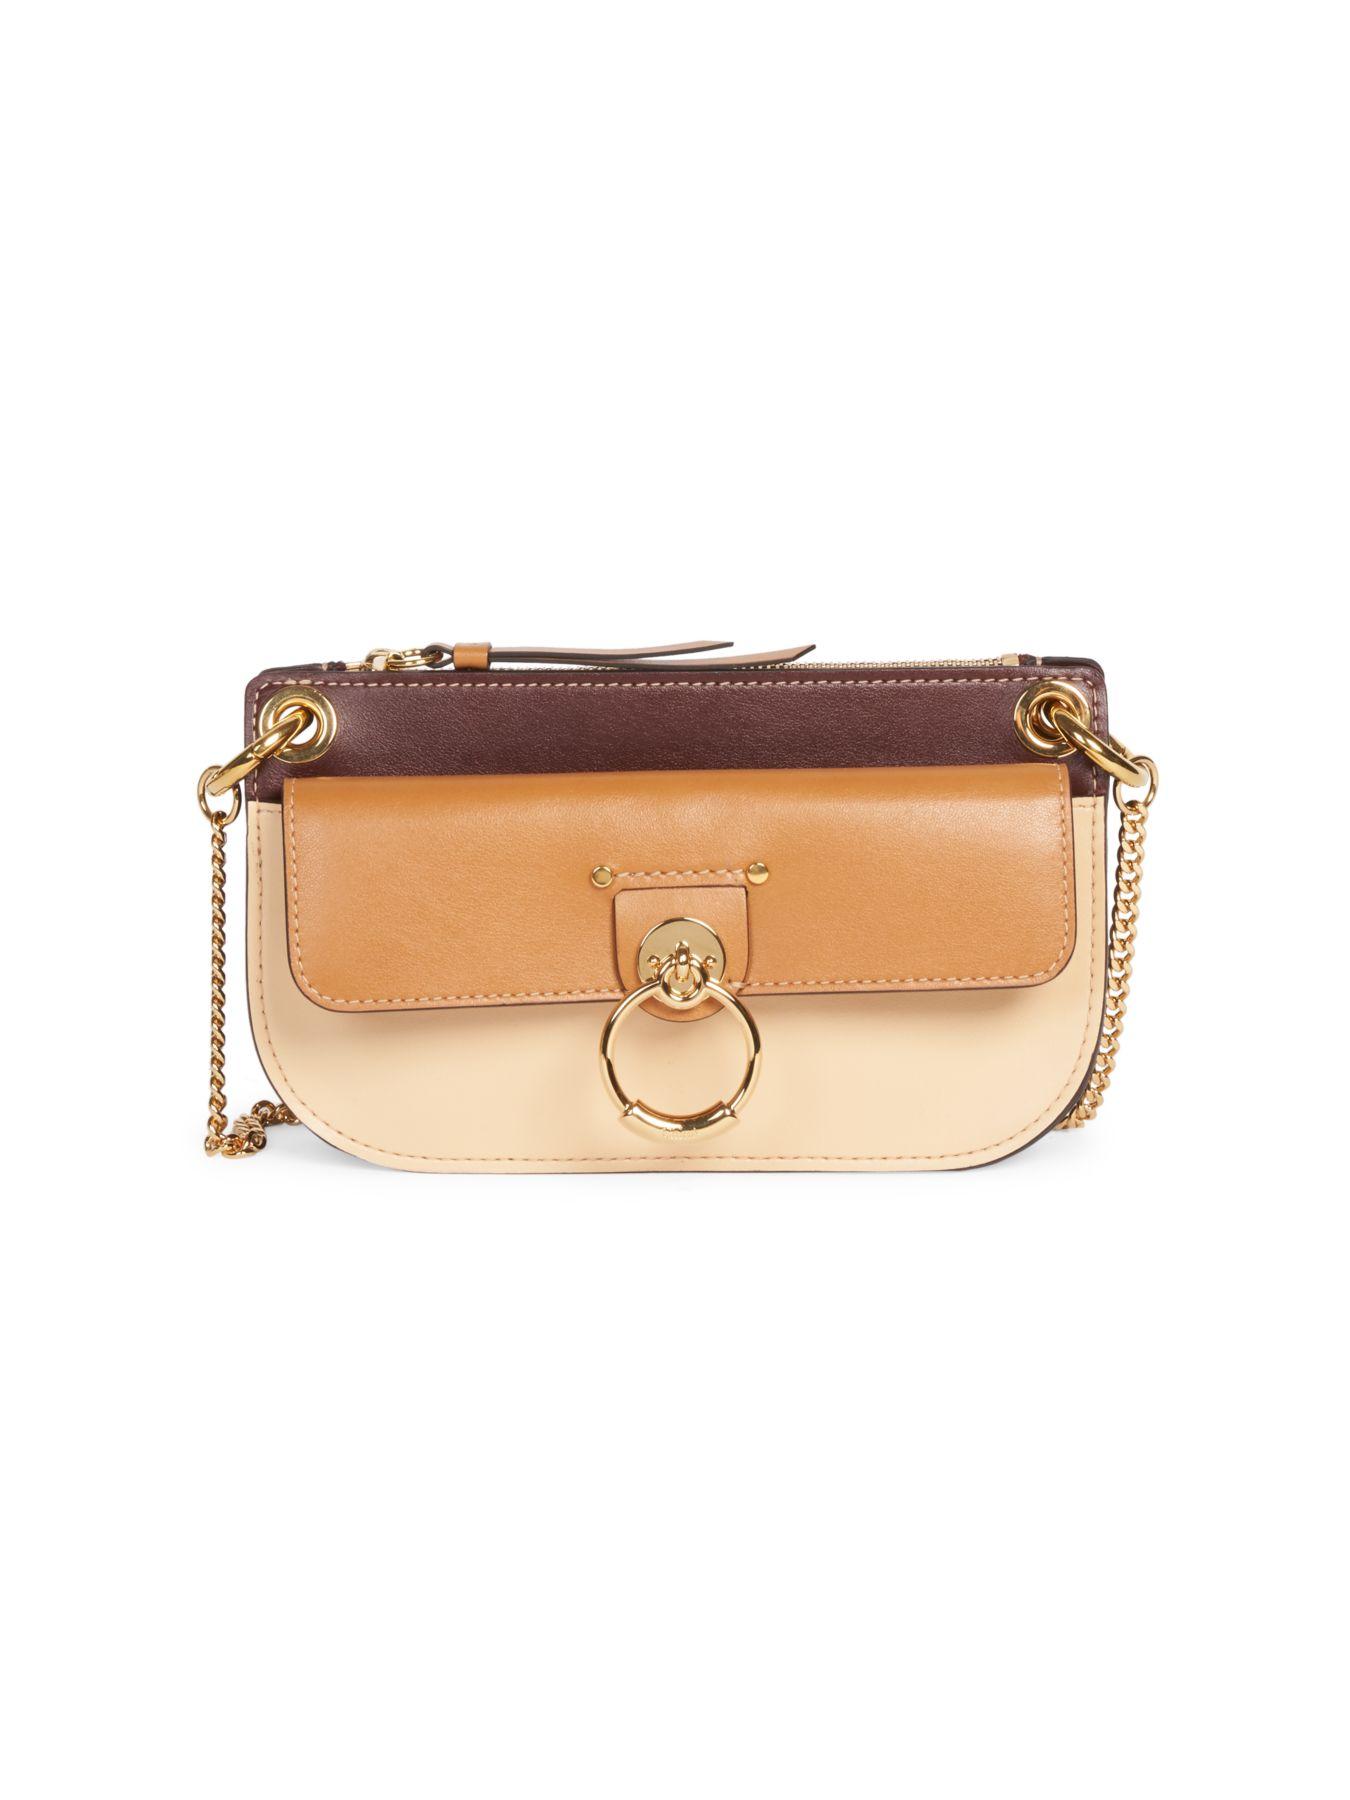 Chloé Mini Tess Colorblock Leather Crossbody Bag in Brown - Lyst